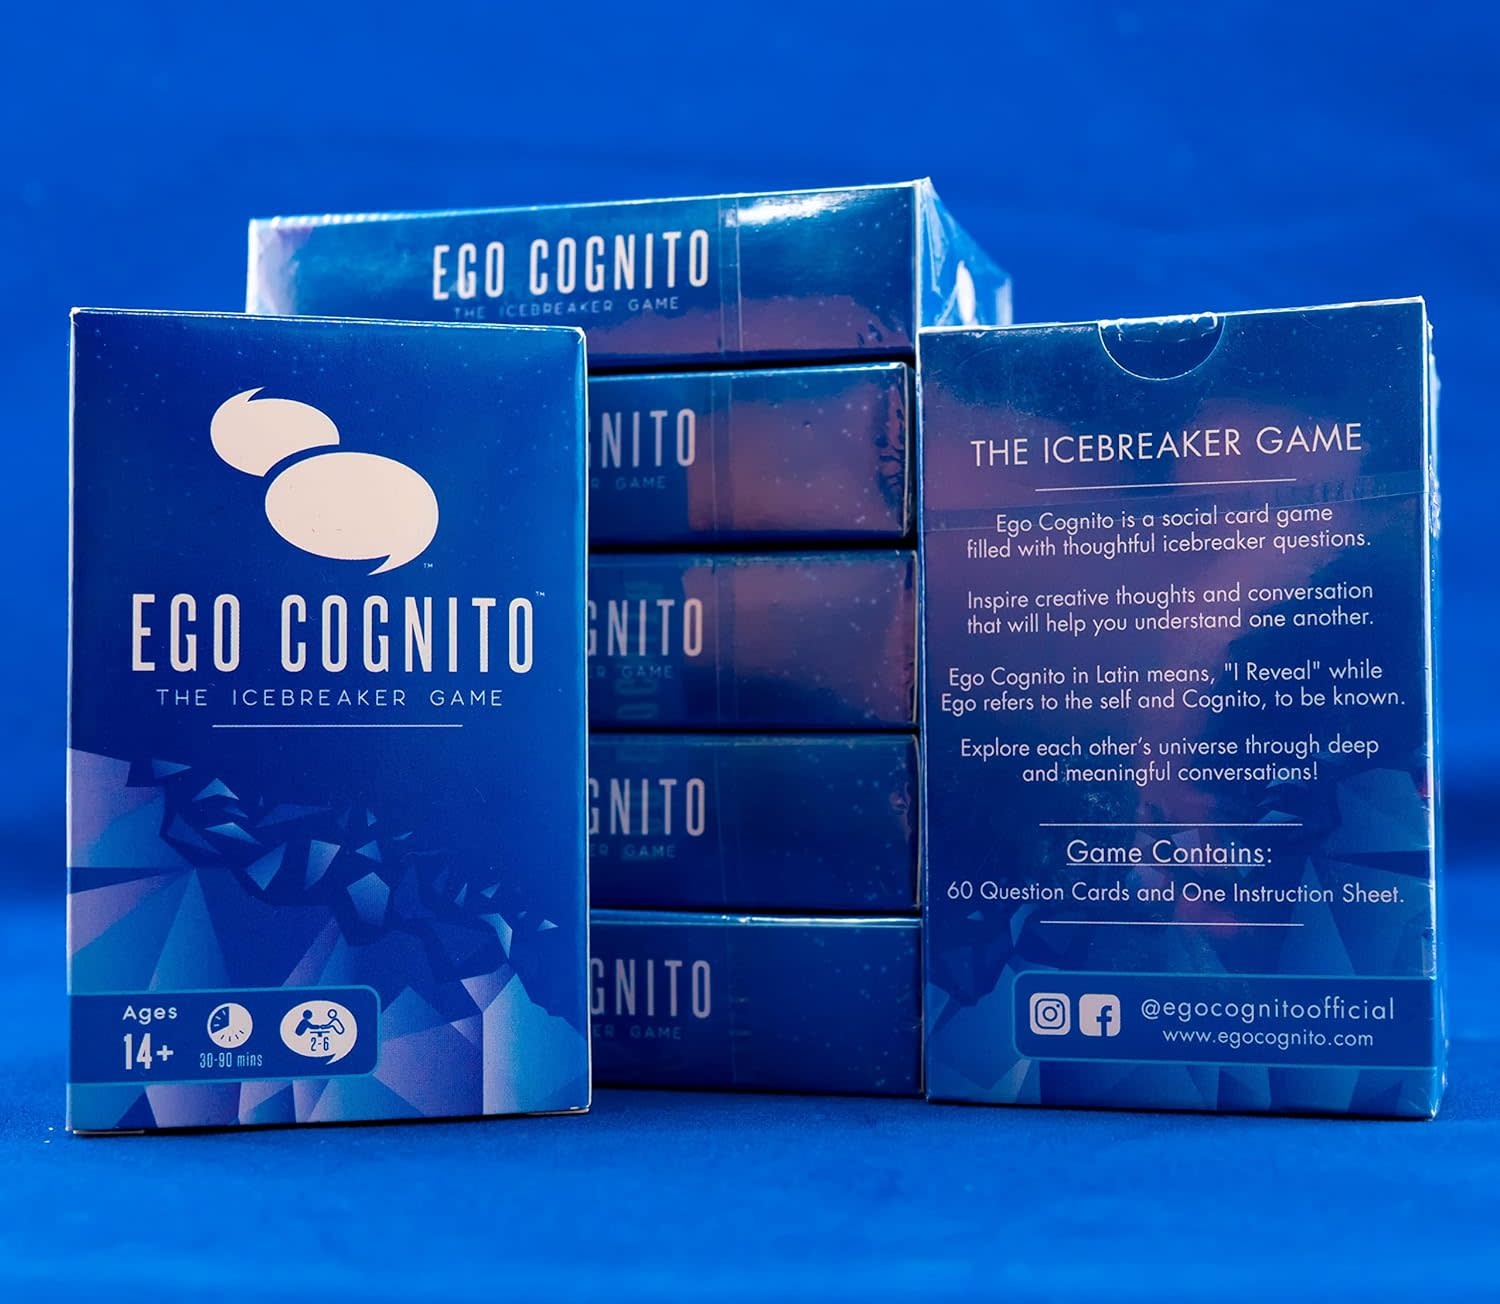 Ego Cognito: The Icebreaker Game